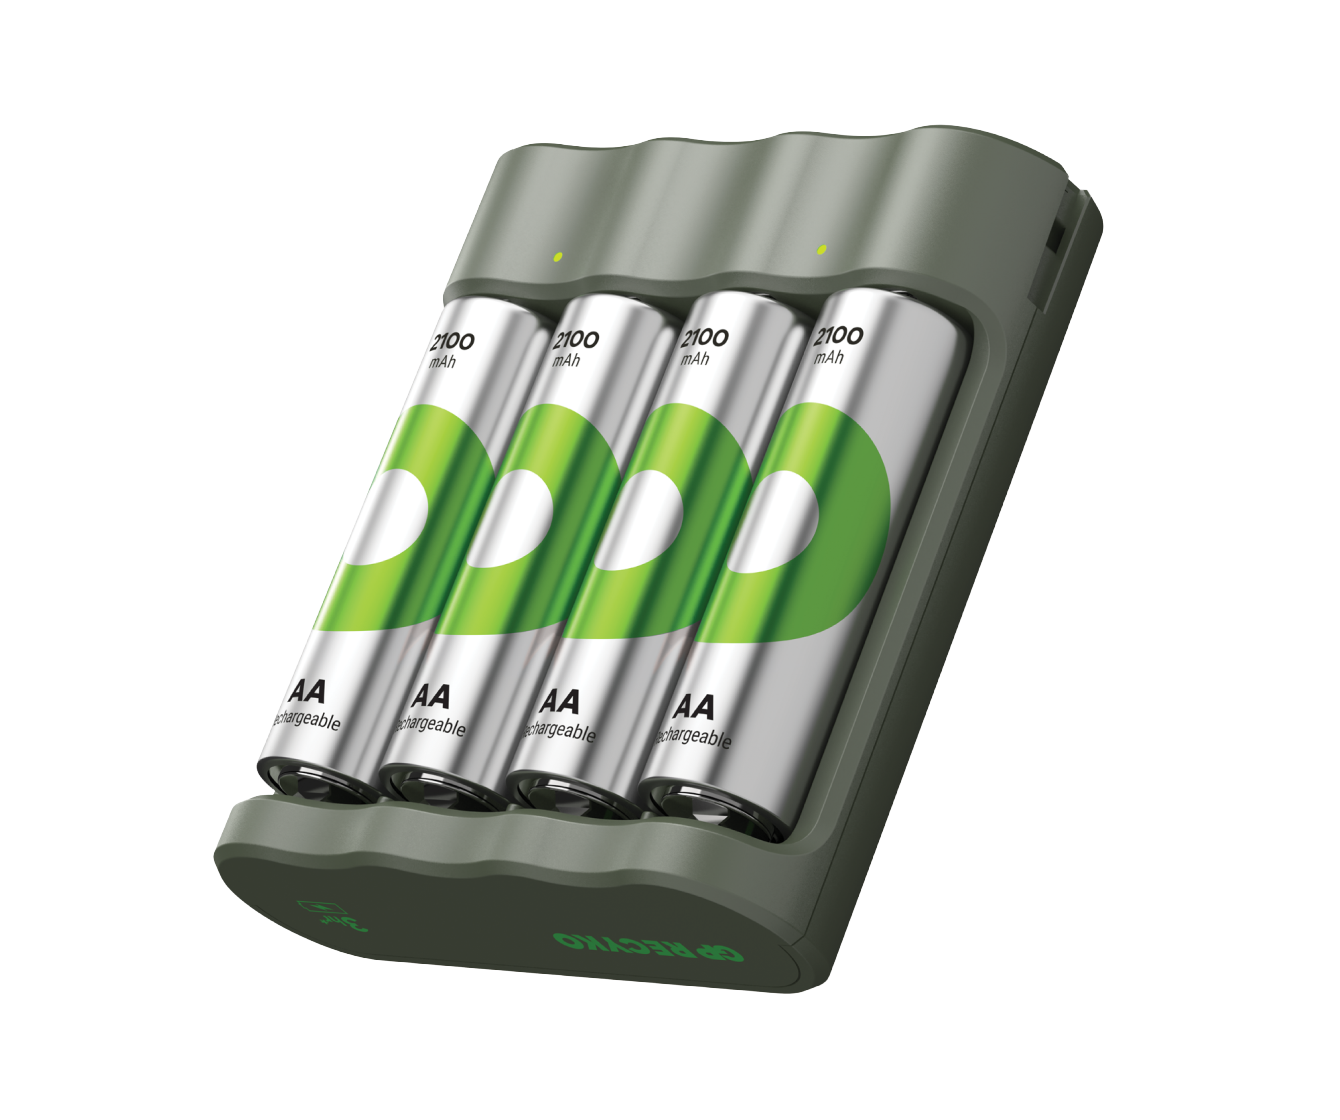 GP Recyko 4-slot NiMH USB-Charger B441 with 2100mAh AA NiMH batteries x 4's